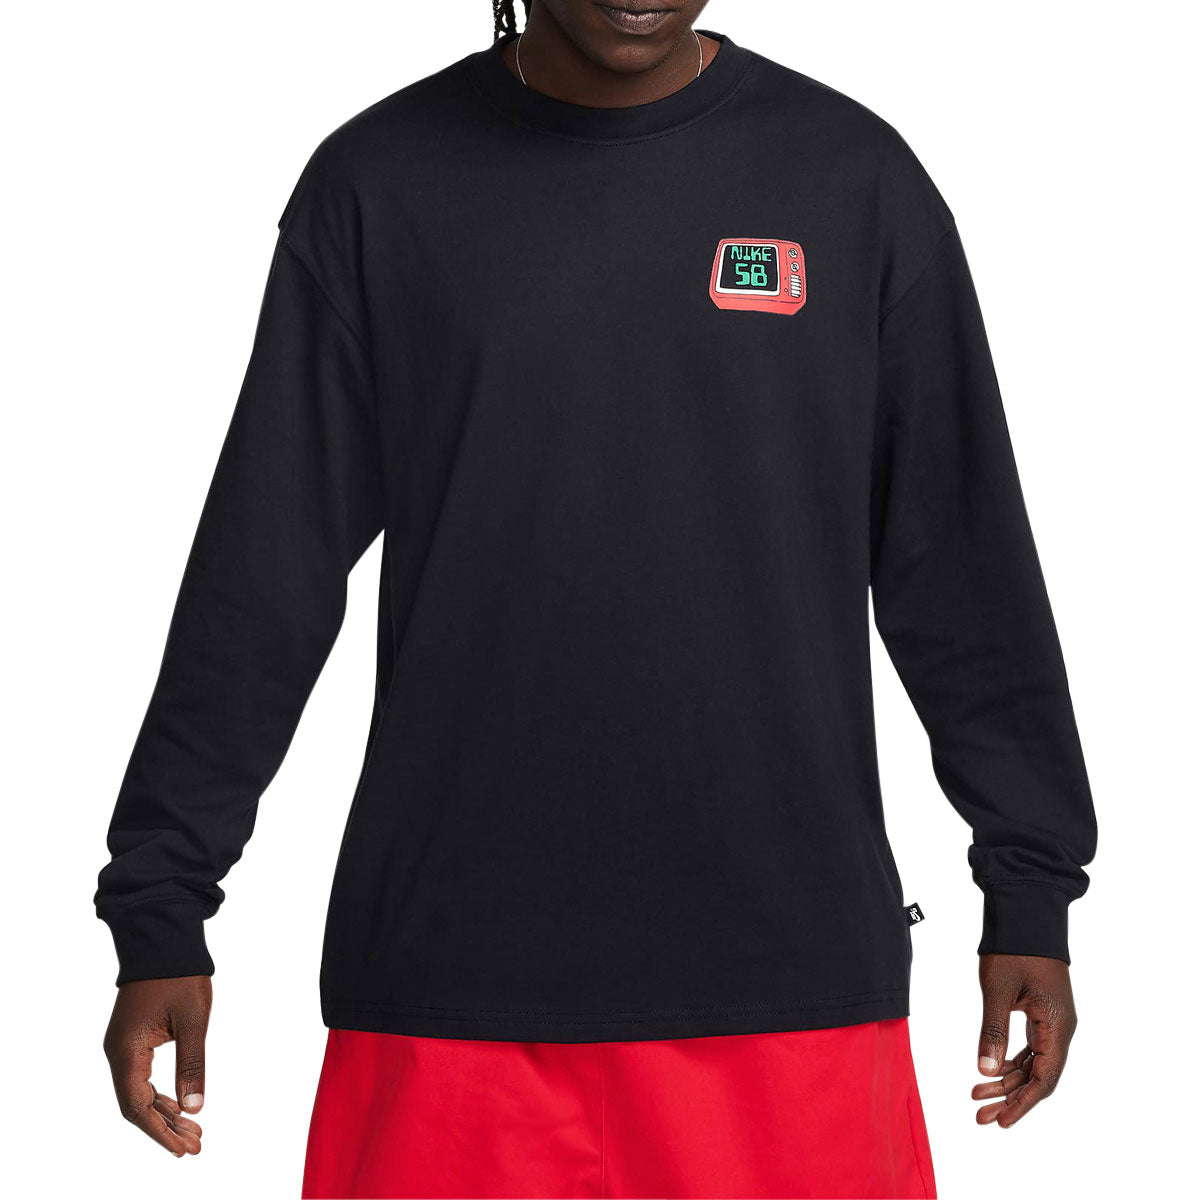 Nike SB TV Long Sleeve T-Shirt - Black image 3